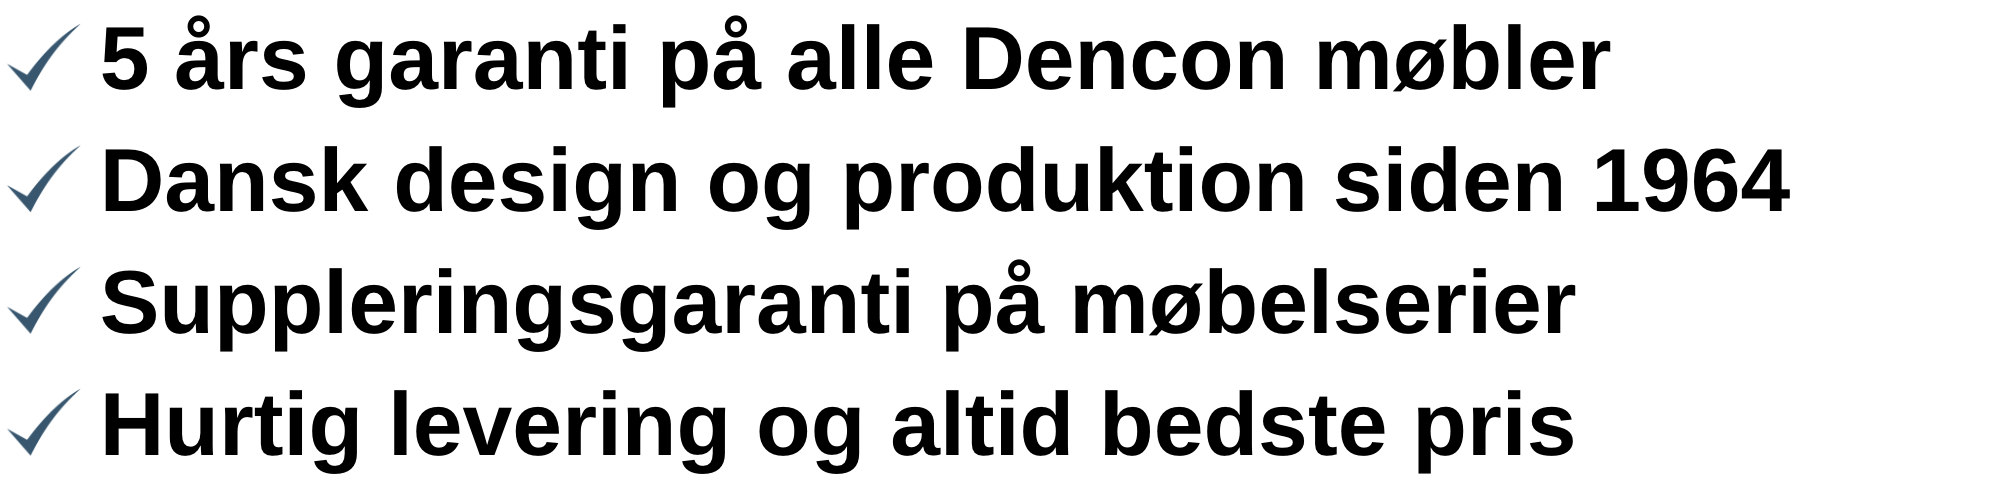 Dencon logotekst